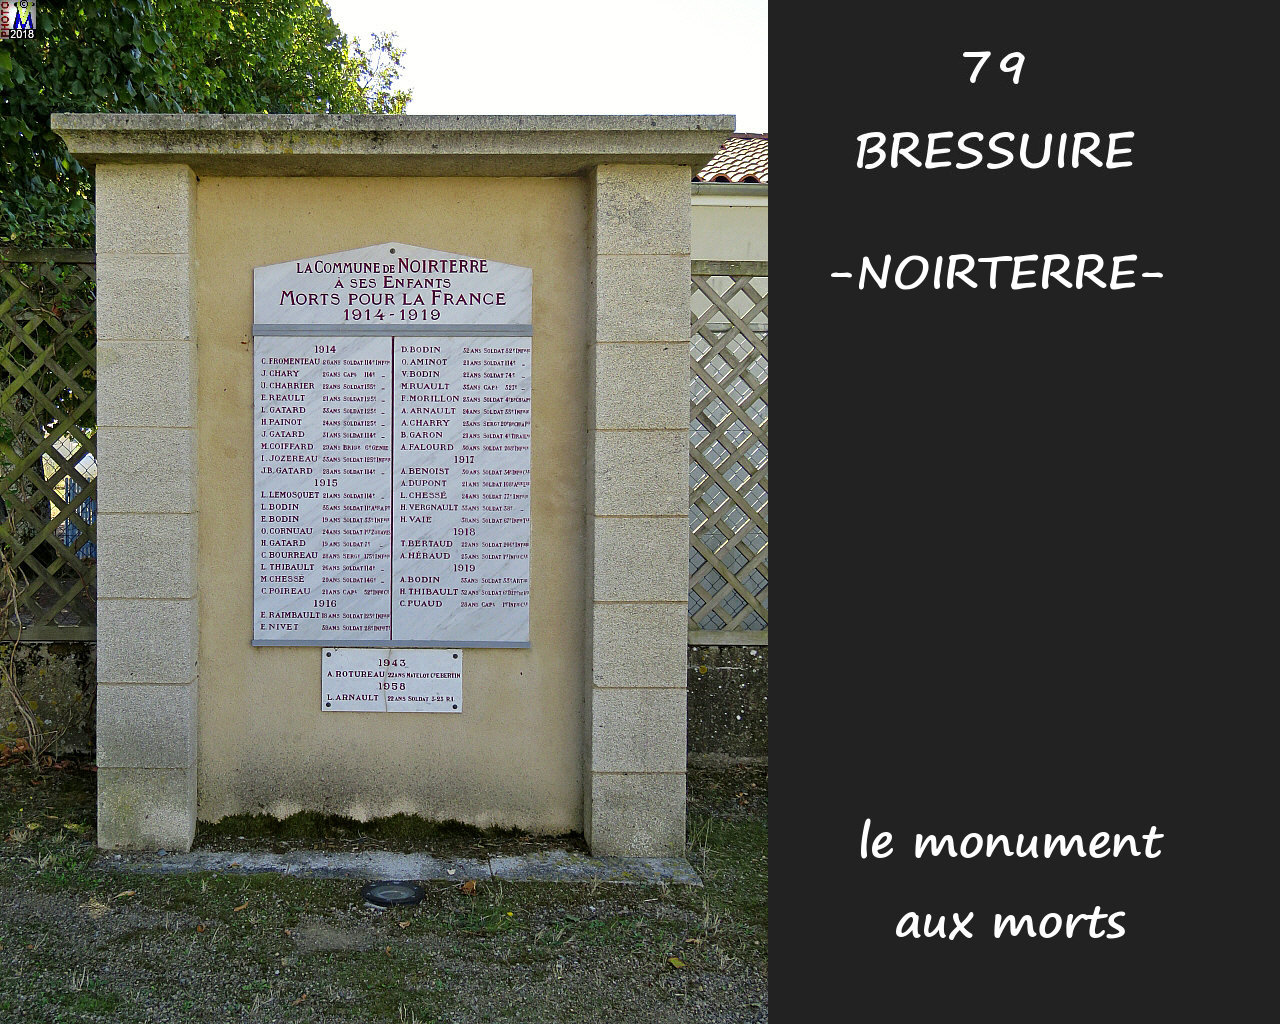 79BRESSUIRE-NOIRTERRE_morts_1000.jpg